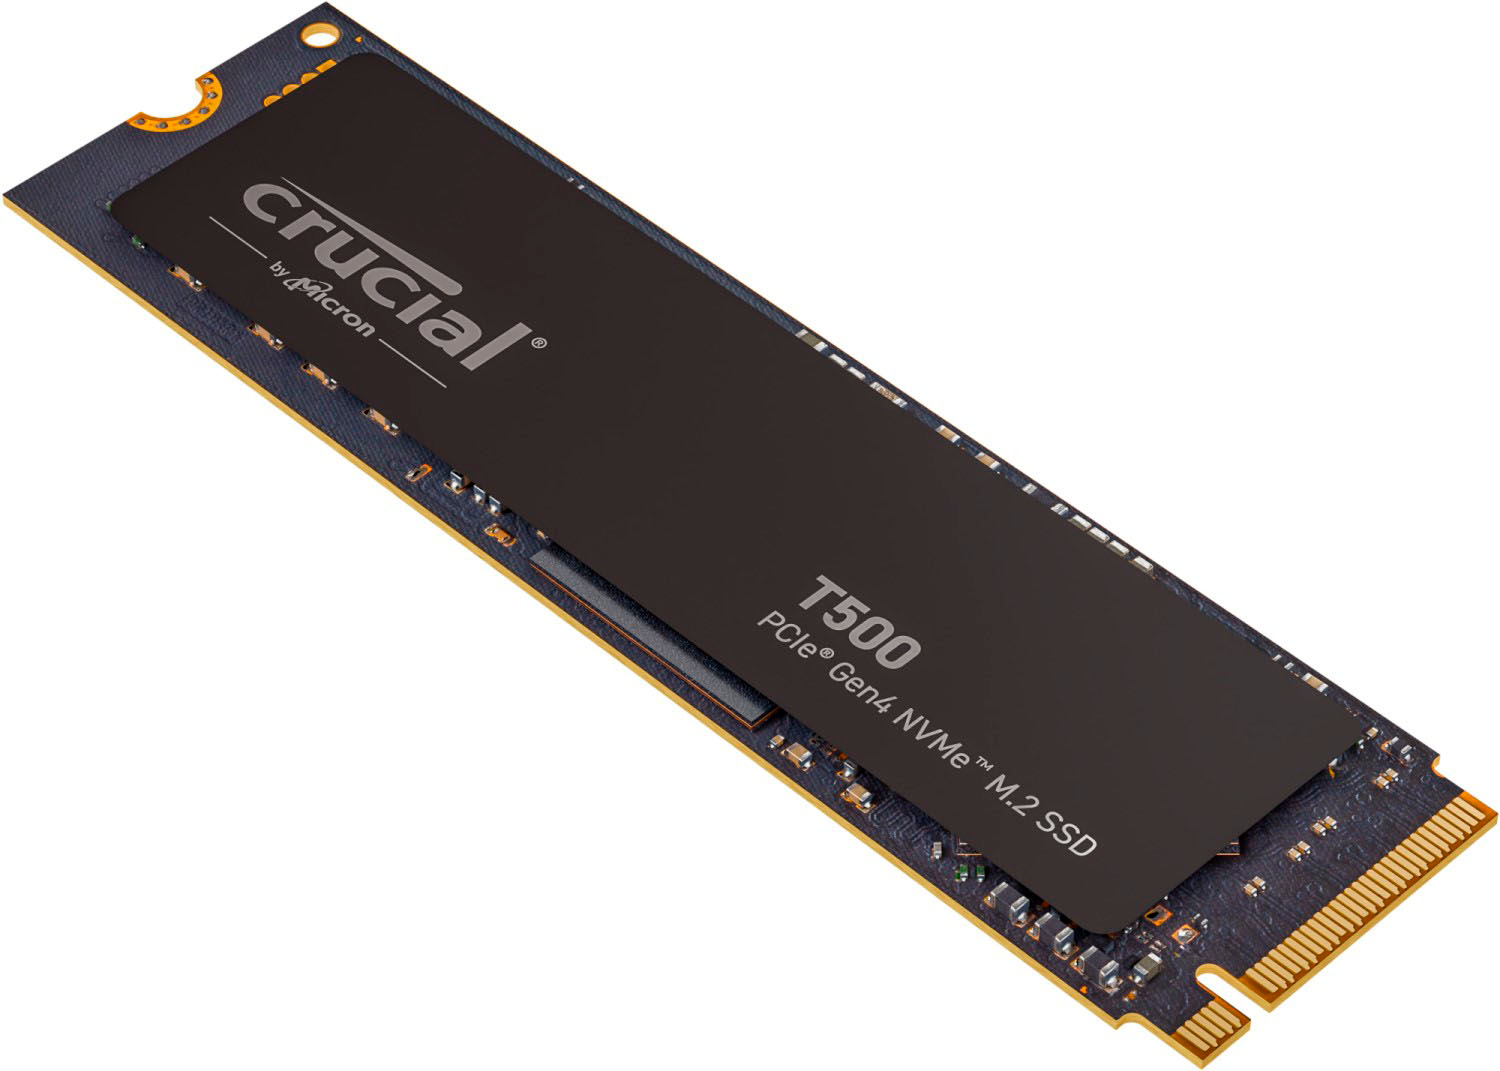 Crucial T500 1TB Internal SSD PCIe Gen 4x4 NVMe M.2 with Heatsink for PS5  CT1000T500SSD5 - Best Buy